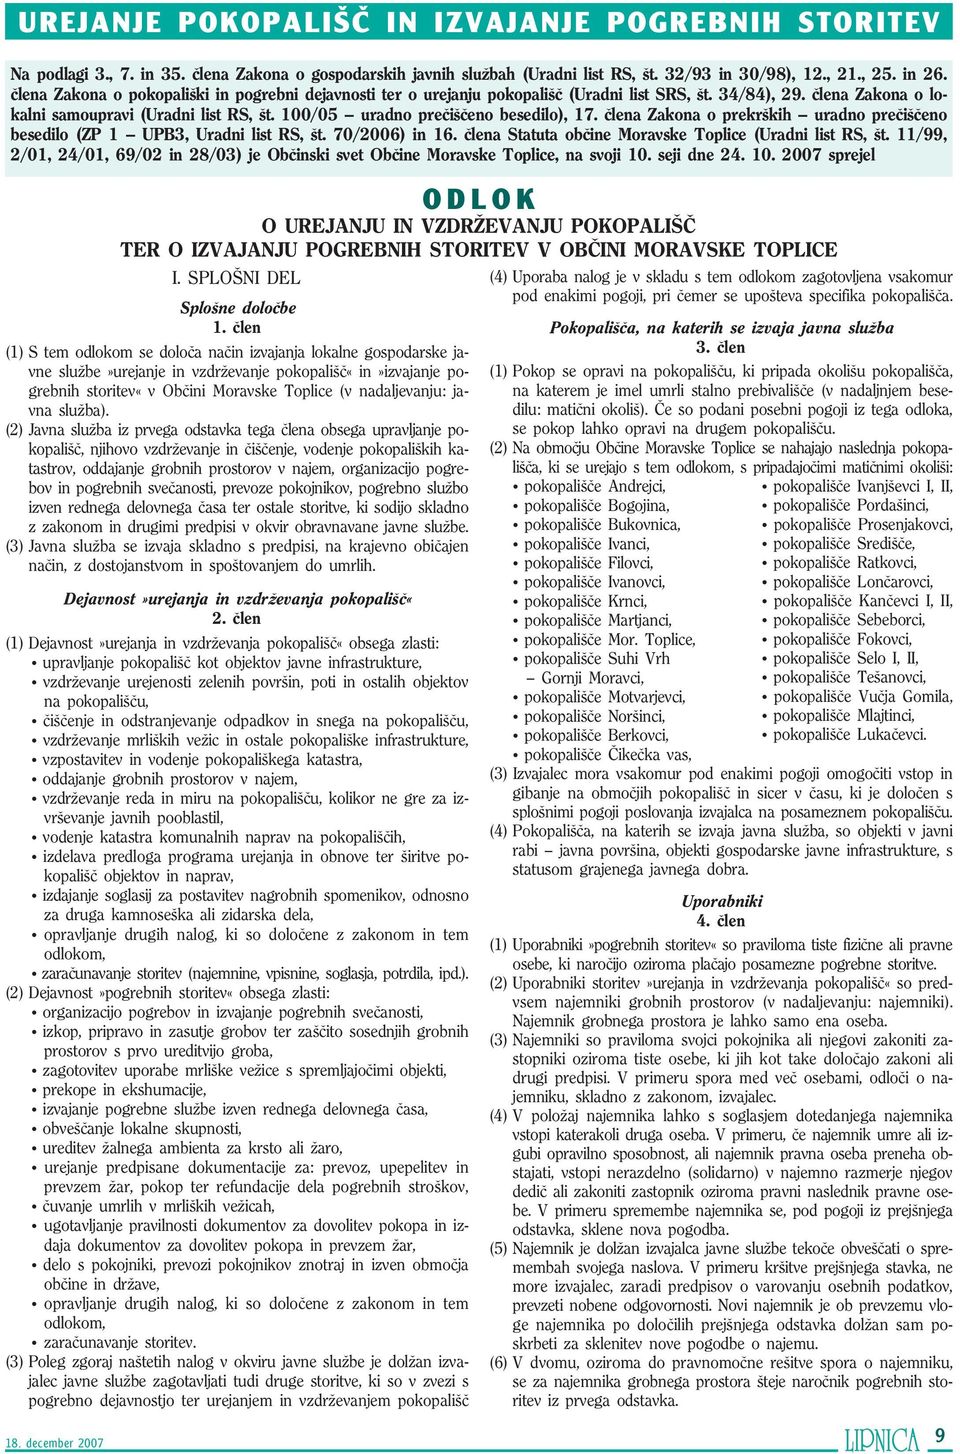 100/05 uradno preœiøœeno besedilo), 17. œlena Zakona o prekrøkih uradno preœiøœeno besedilo (ZP 1 UPB3, Uradni list RS, øt. 70/2006) in 16. œlena Statuta obœine Moravske Toplice (Uradni list RS, øt.